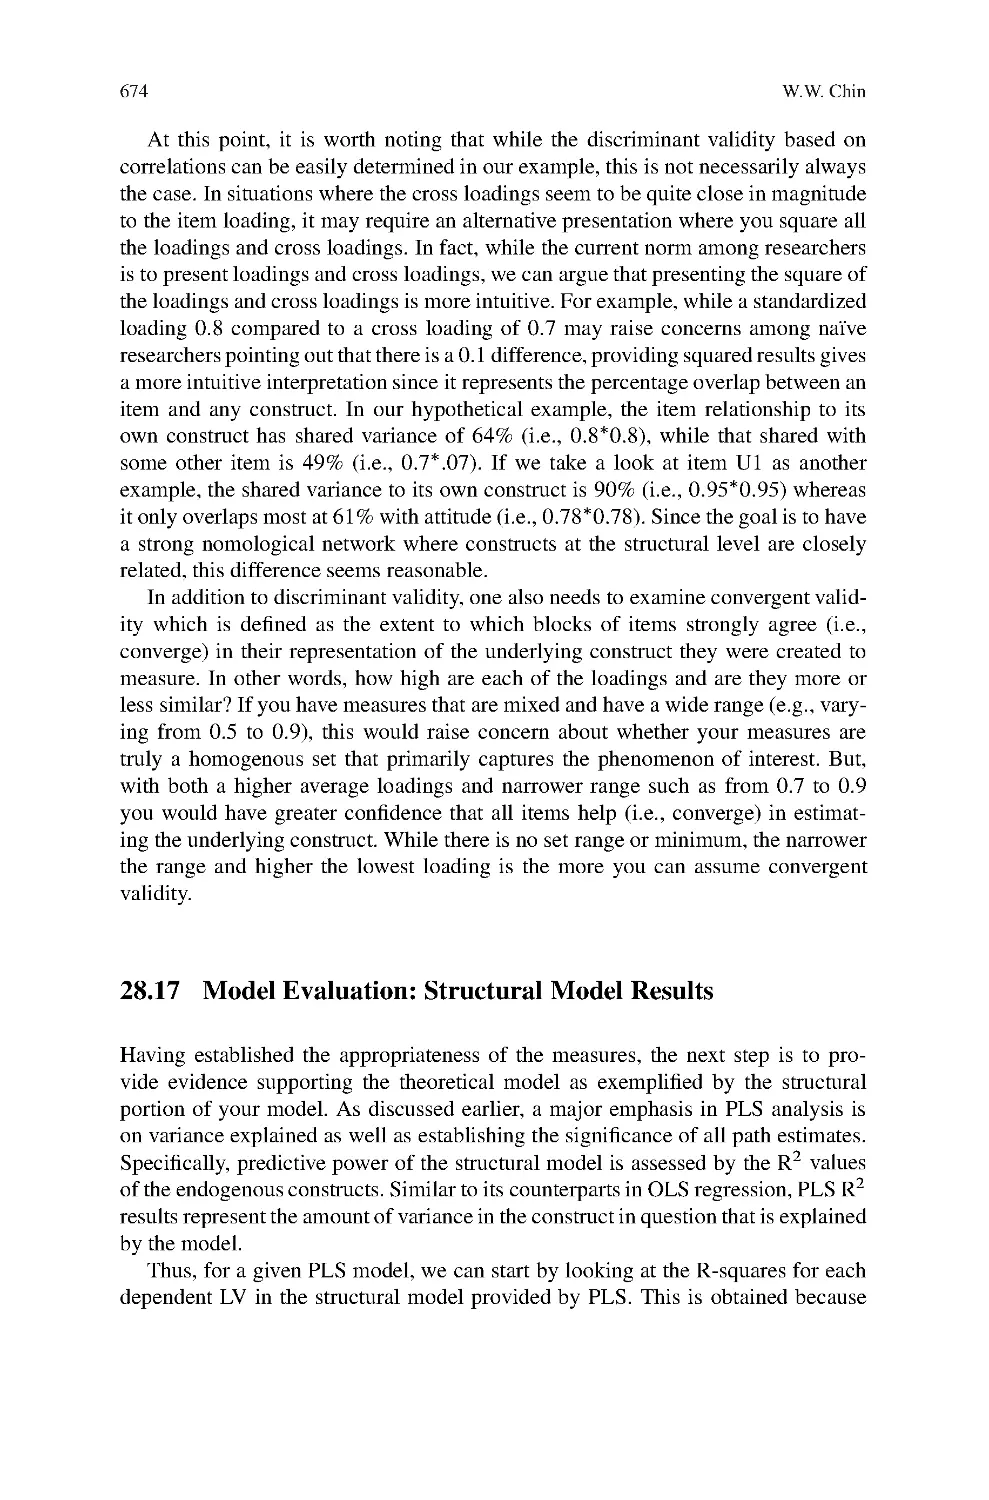 28.17 Model Evaluation: Structural Model Results